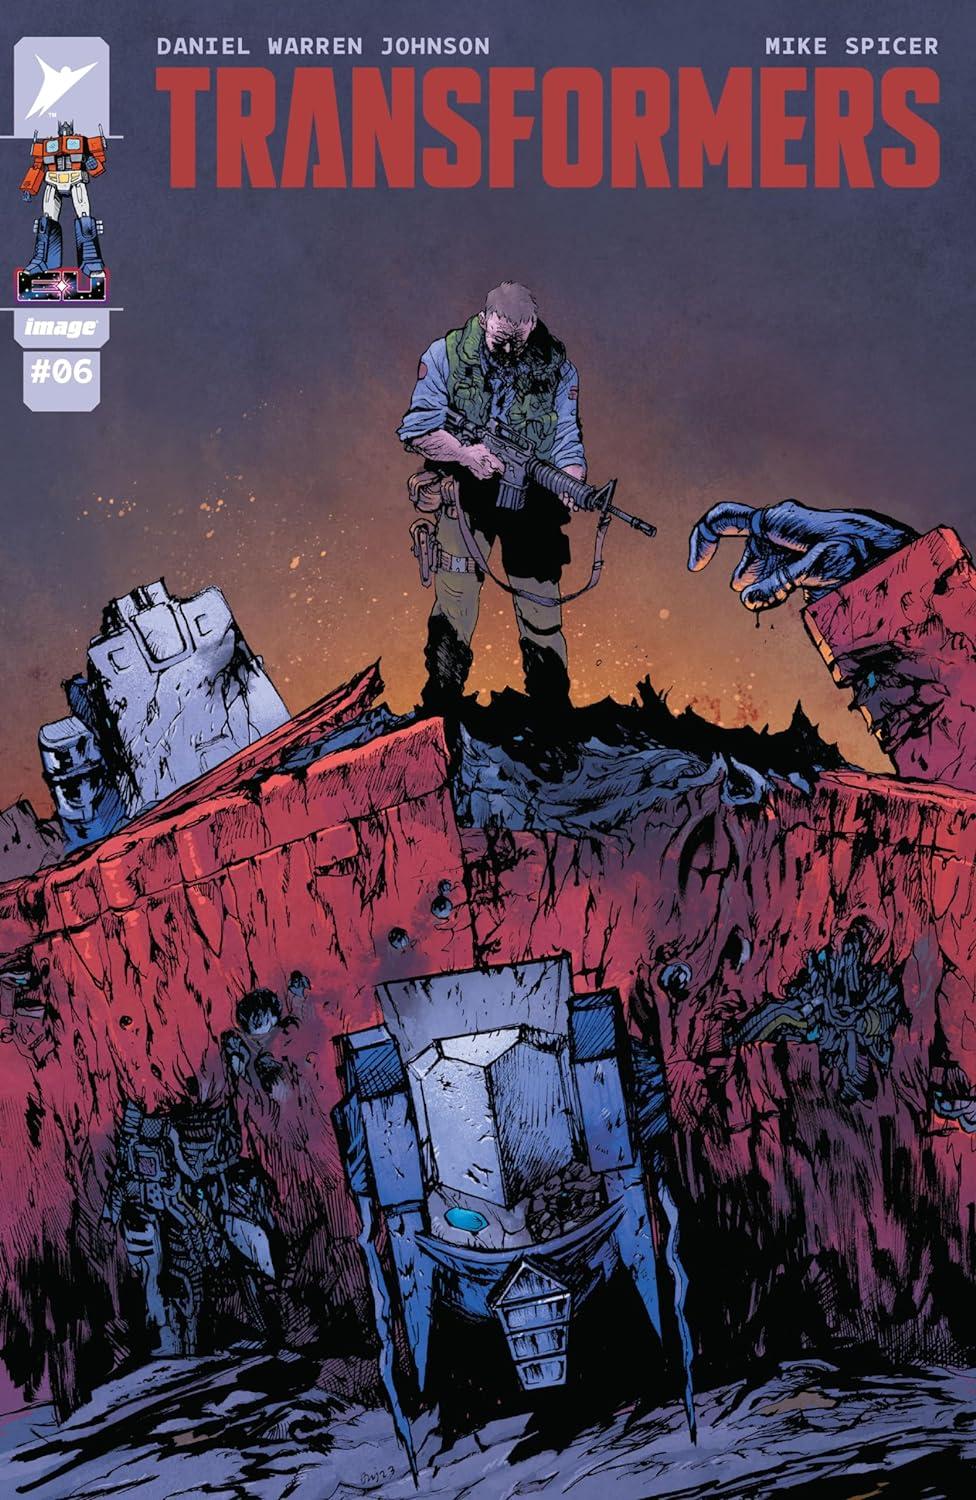 Transformers #6 cover art